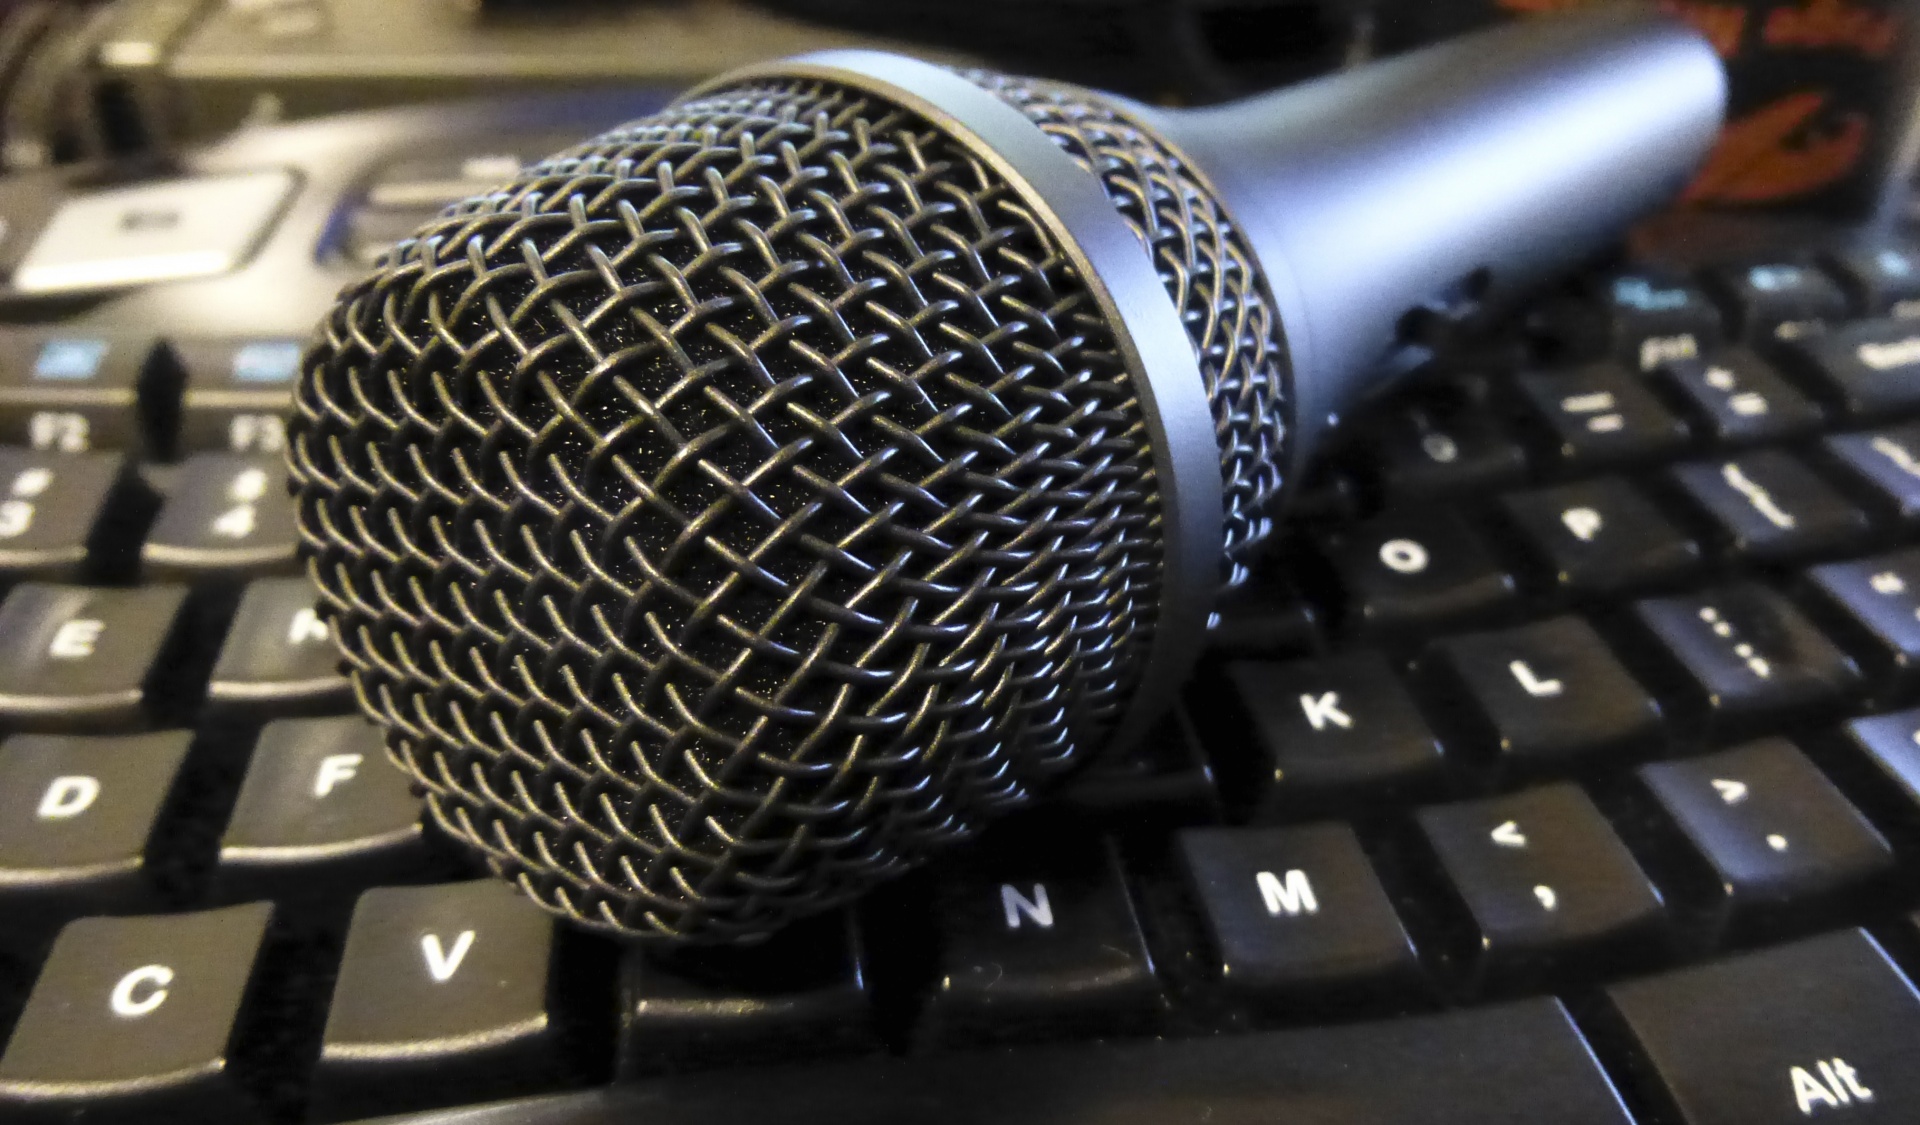 Microfone Podcast